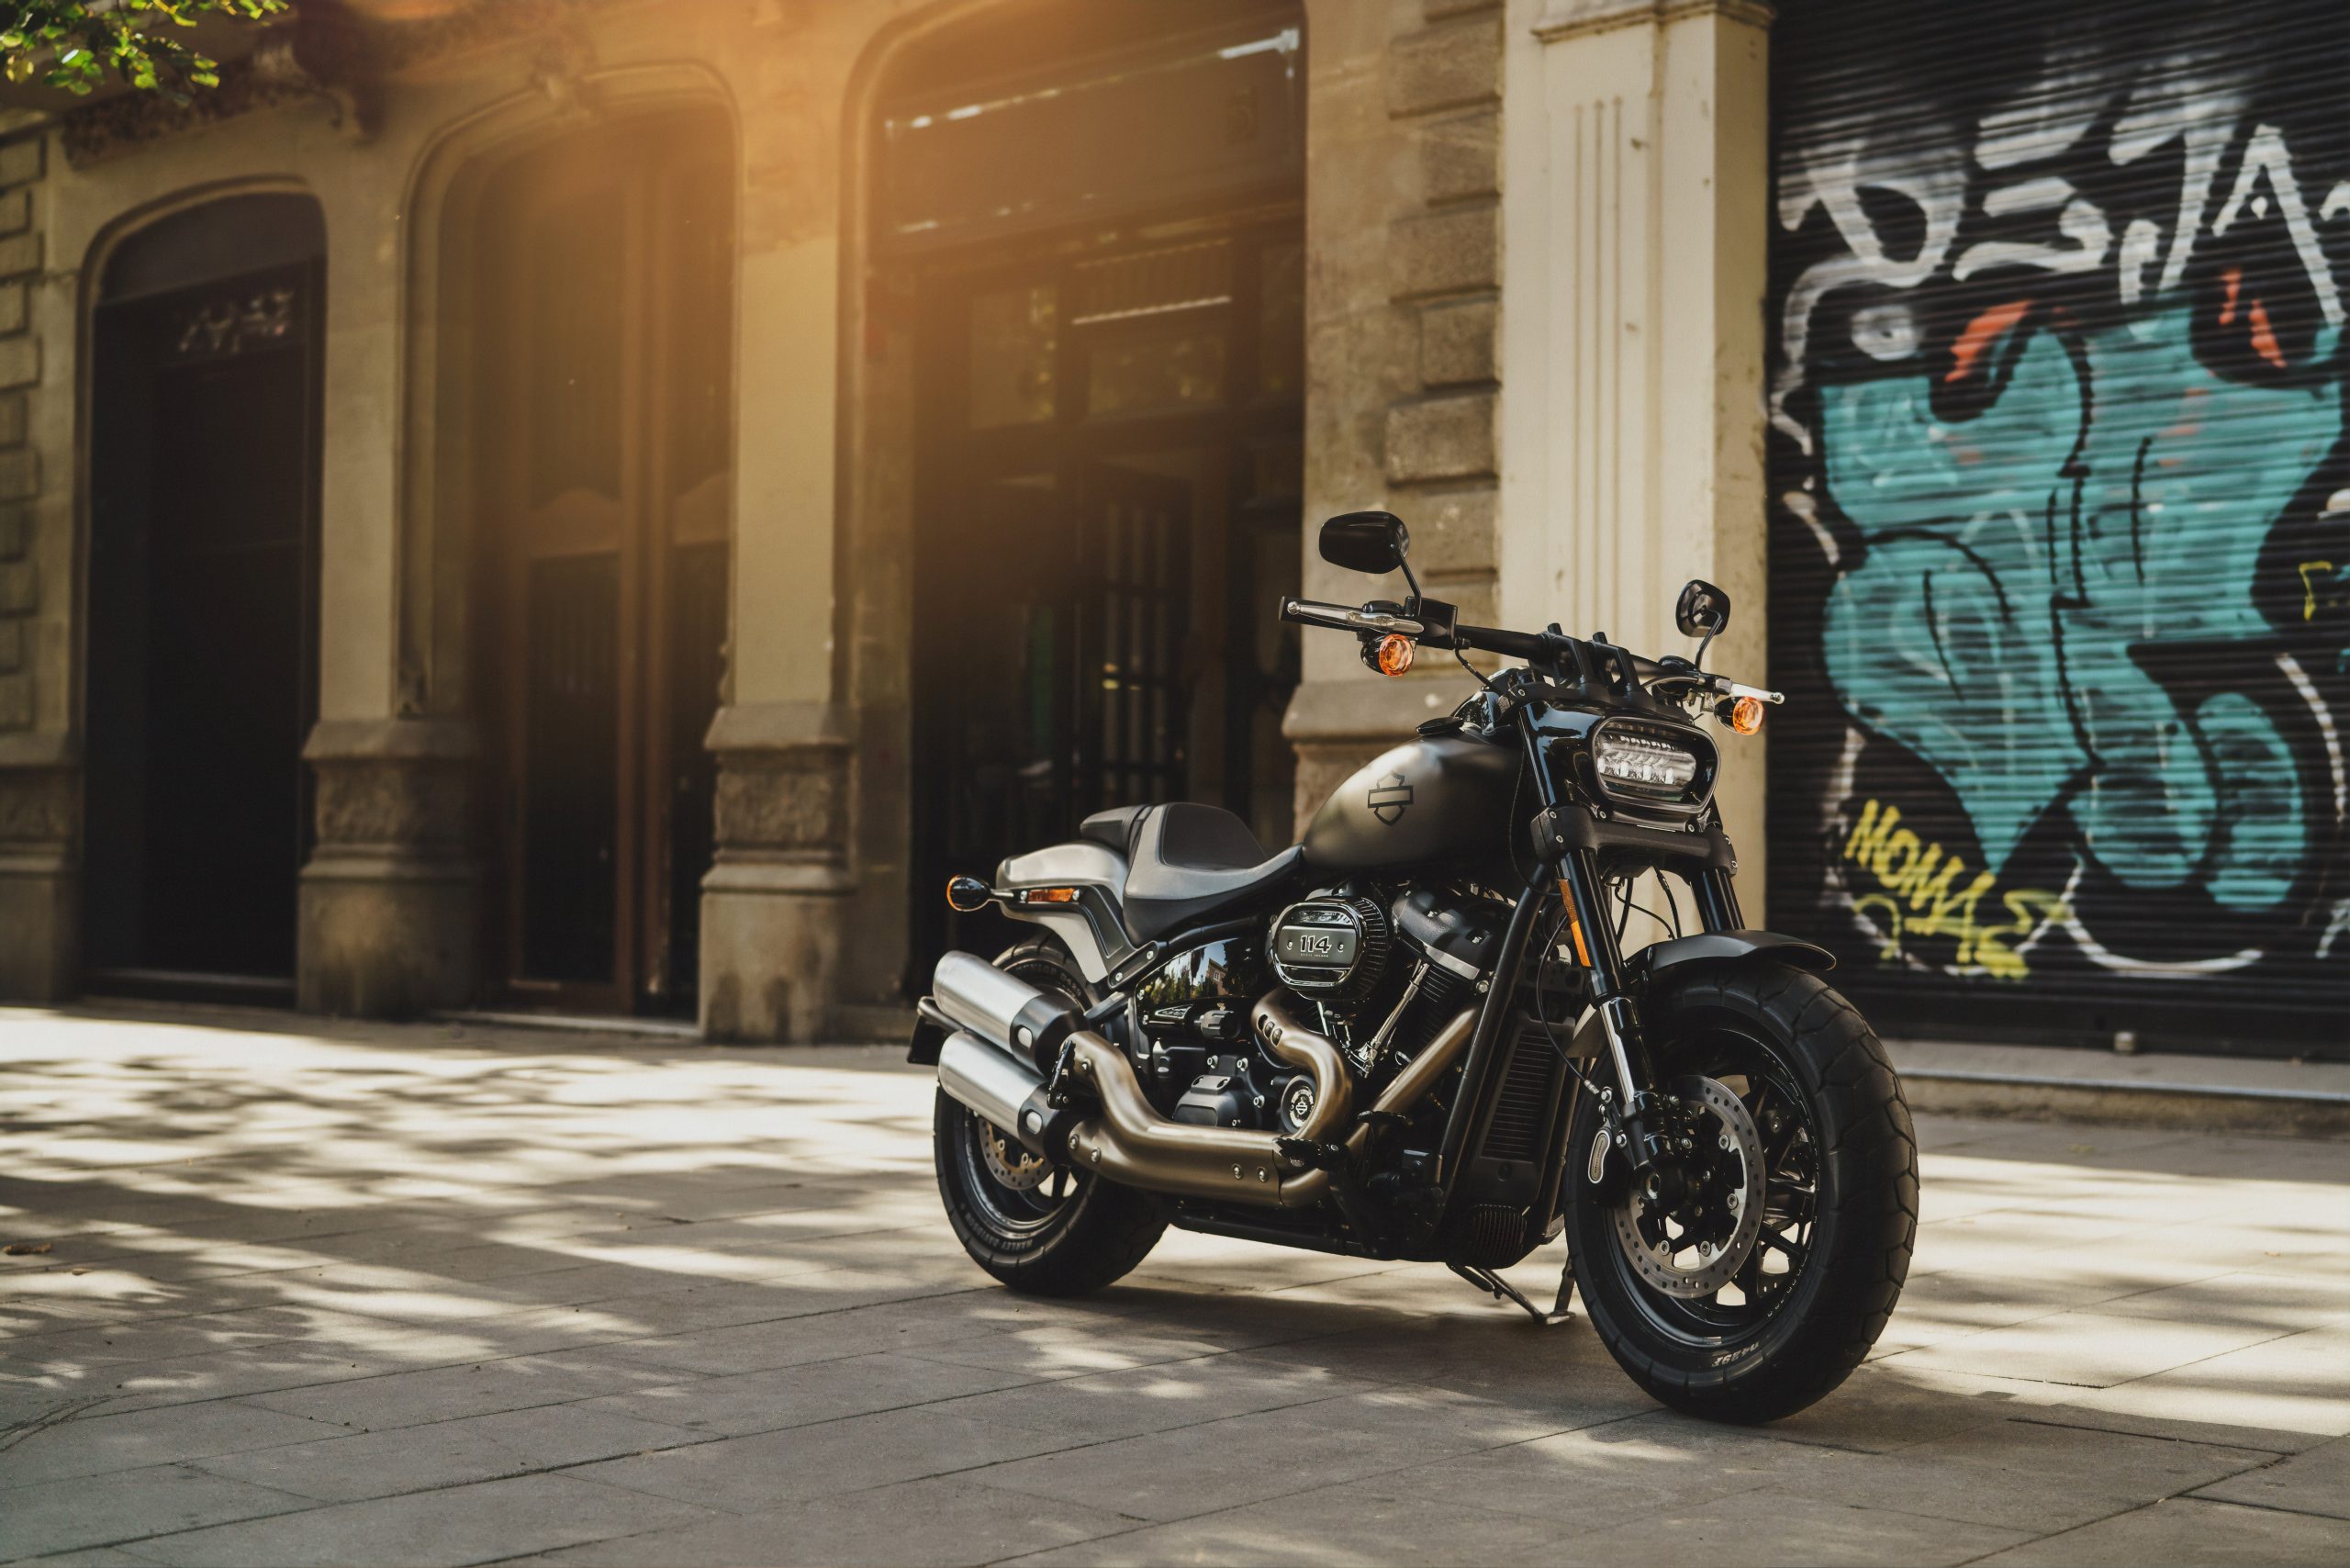 Harley Davidson motorcycle on a city pavement